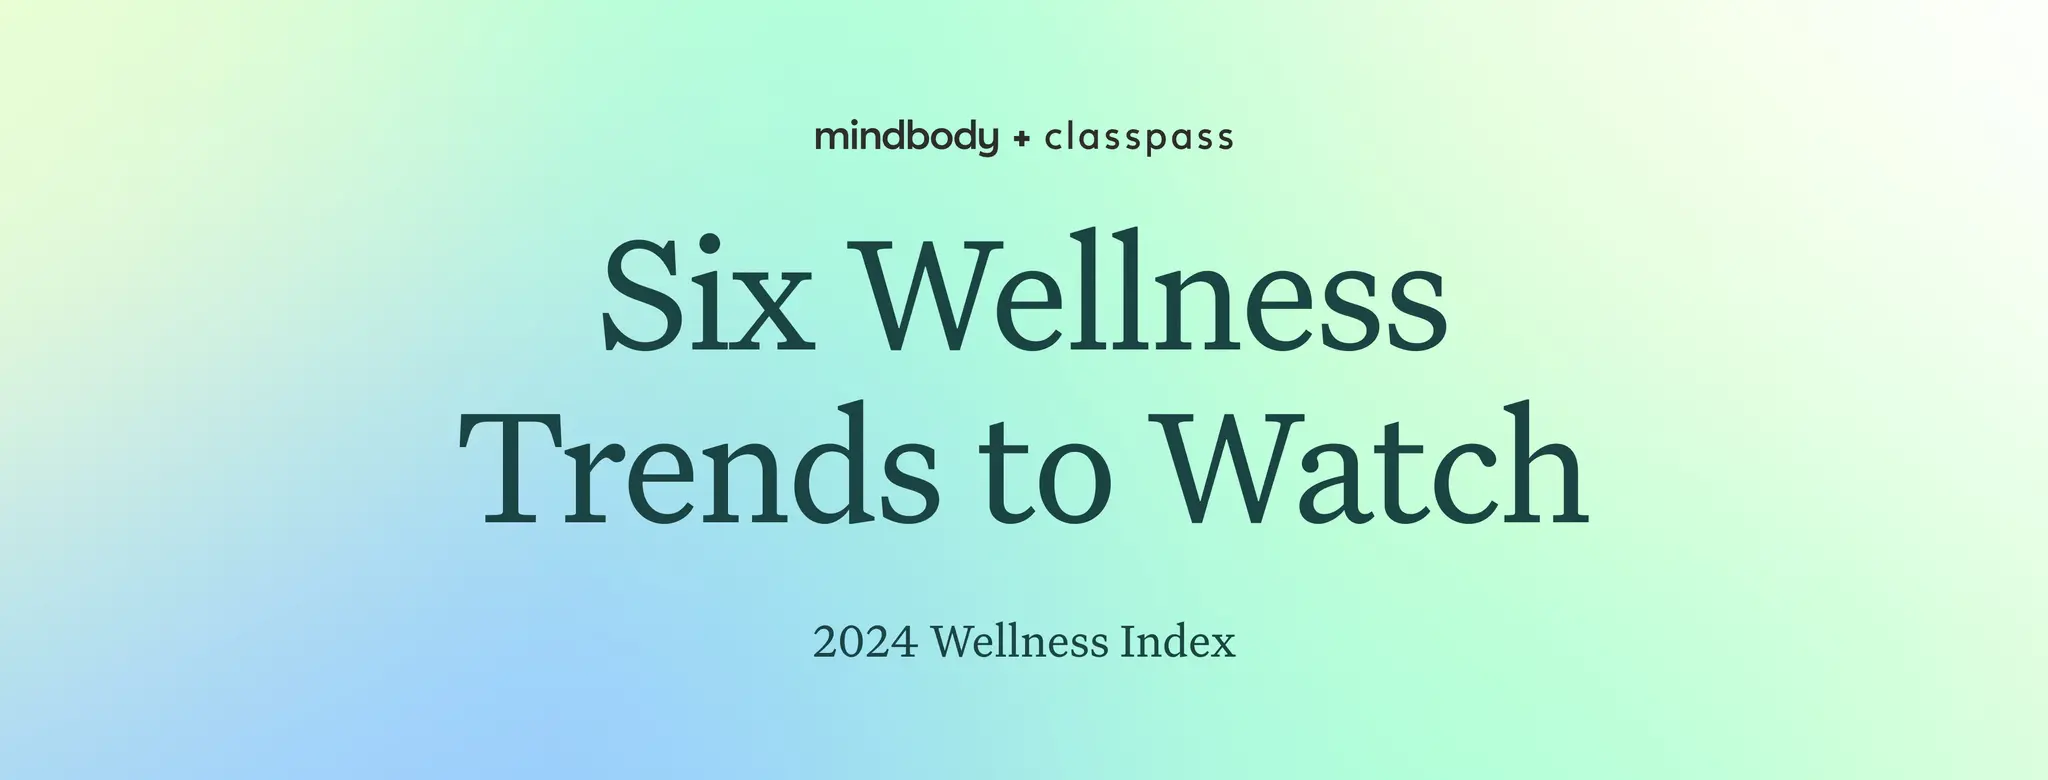 Six Wellness Trends to Watch